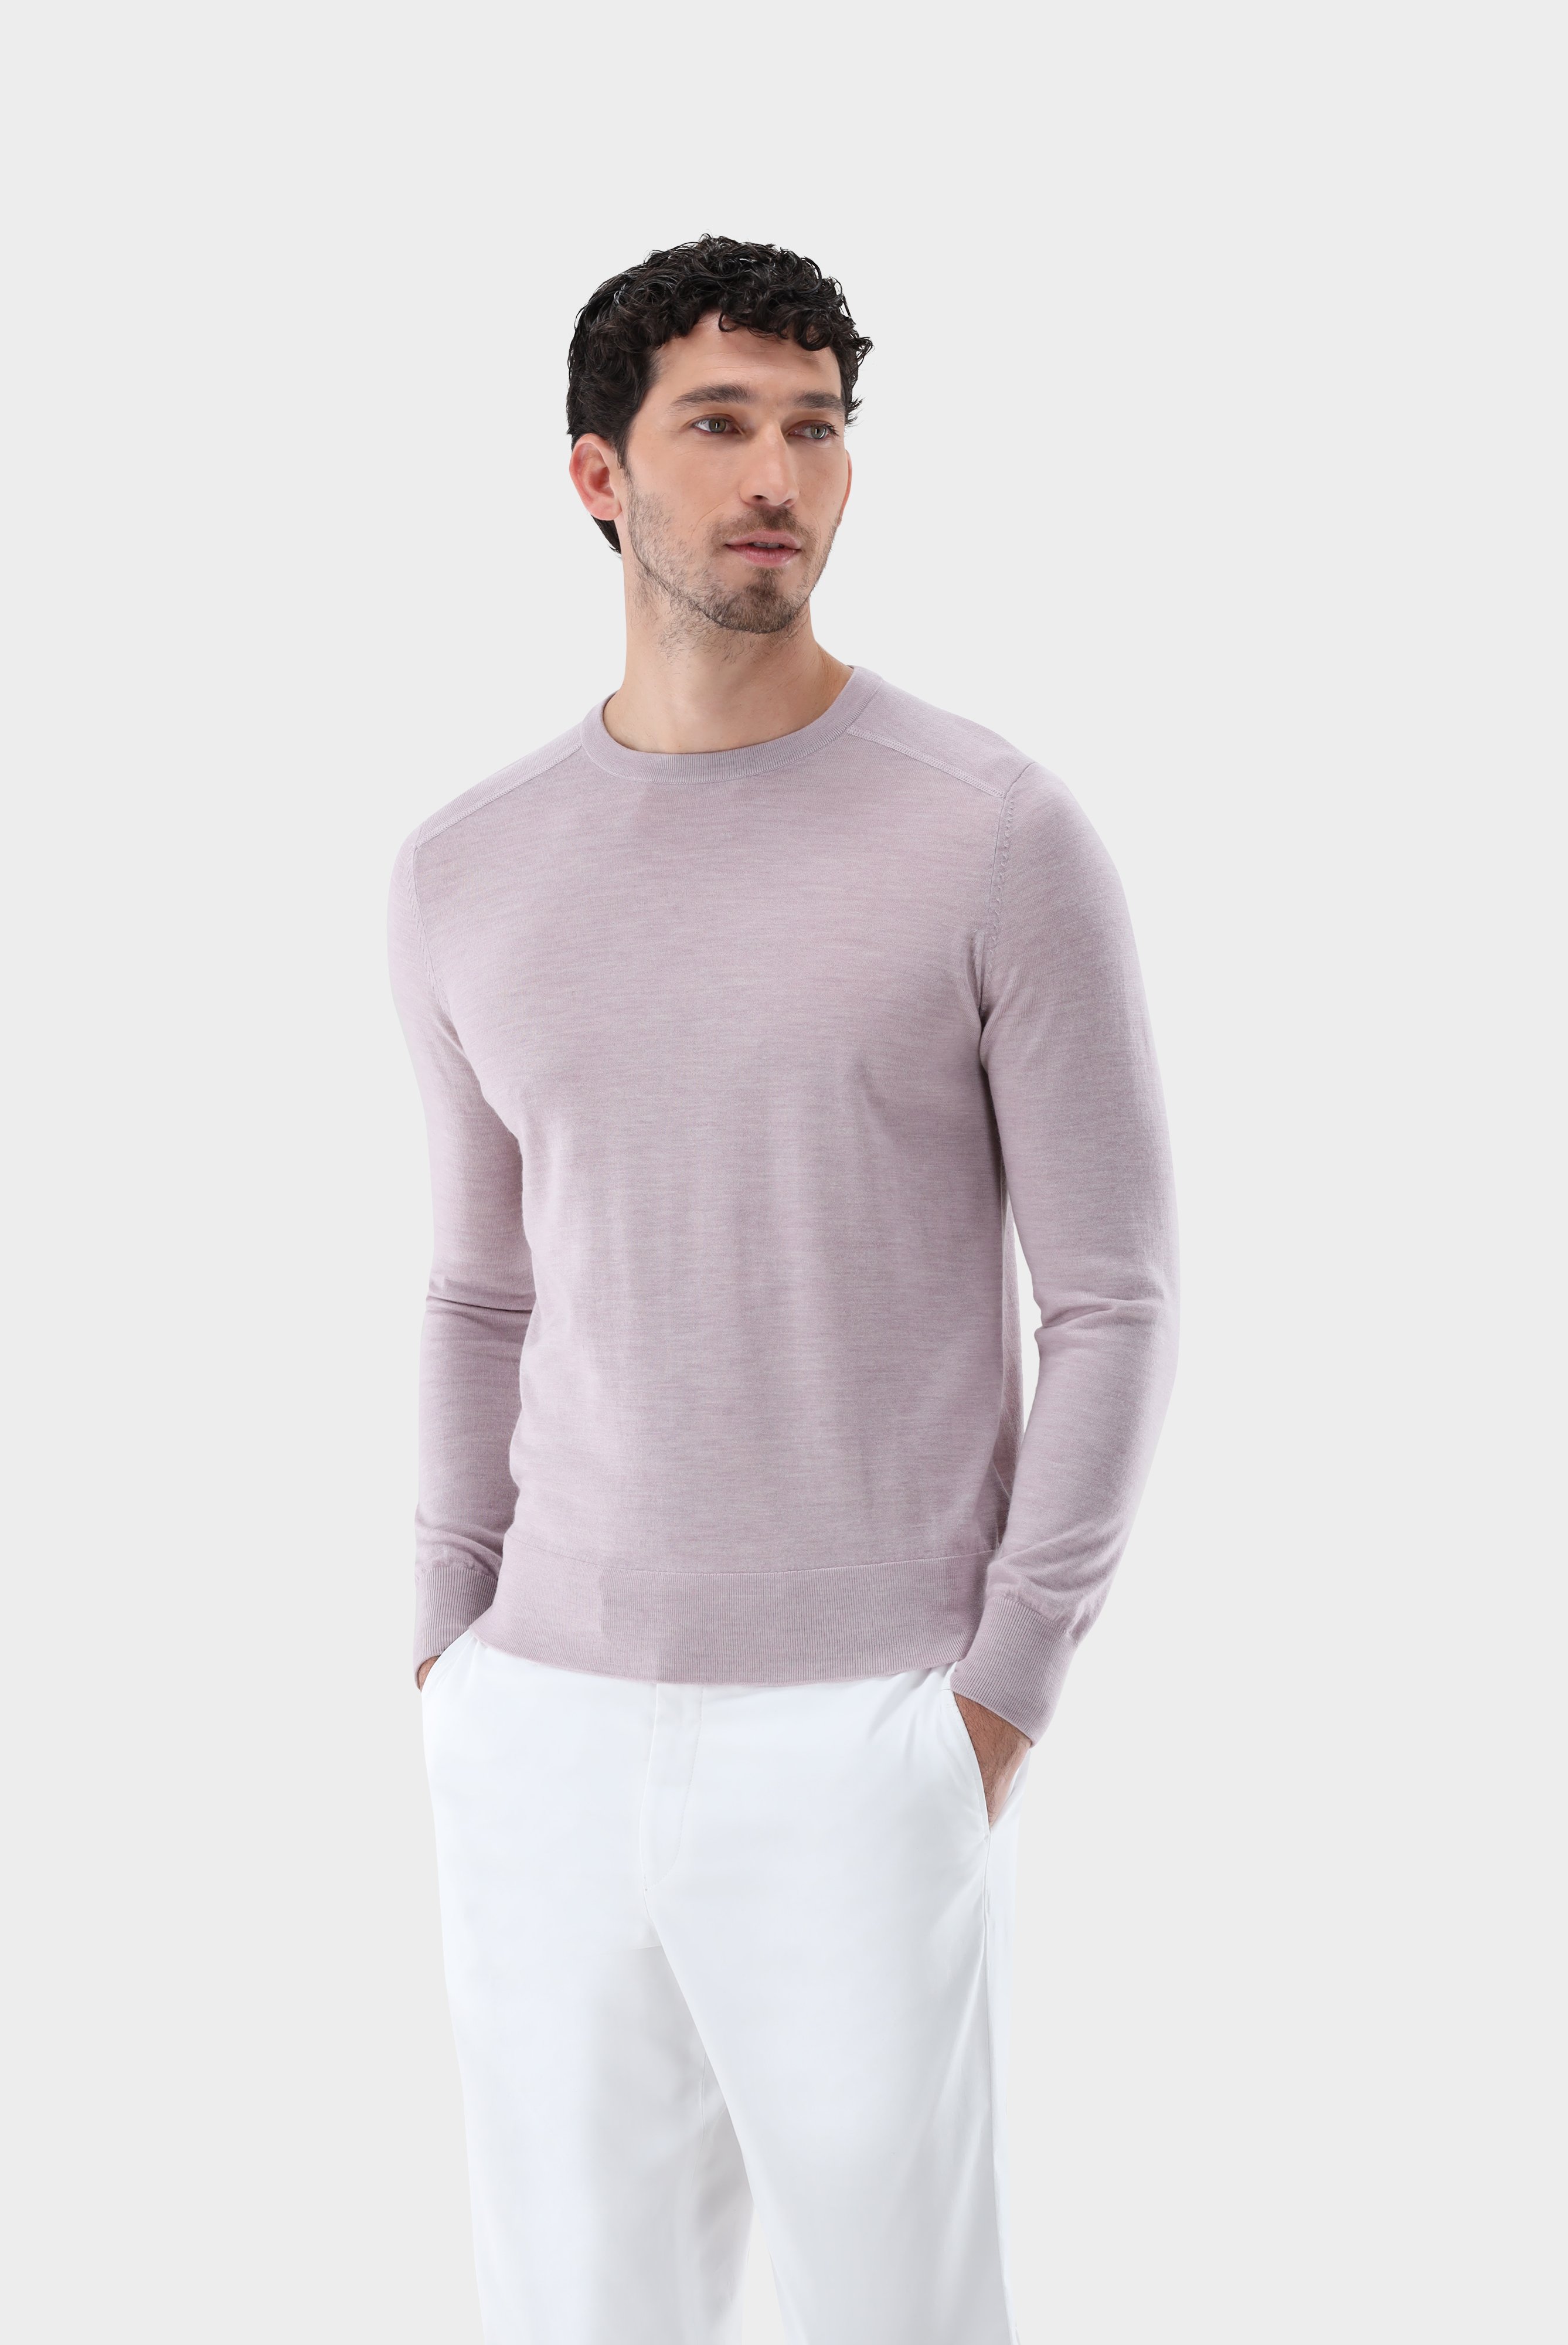 Sweaters & Cardigans+Crewneck in Ultrafine Merino Wool+82.8649.4M.S00173.610.M